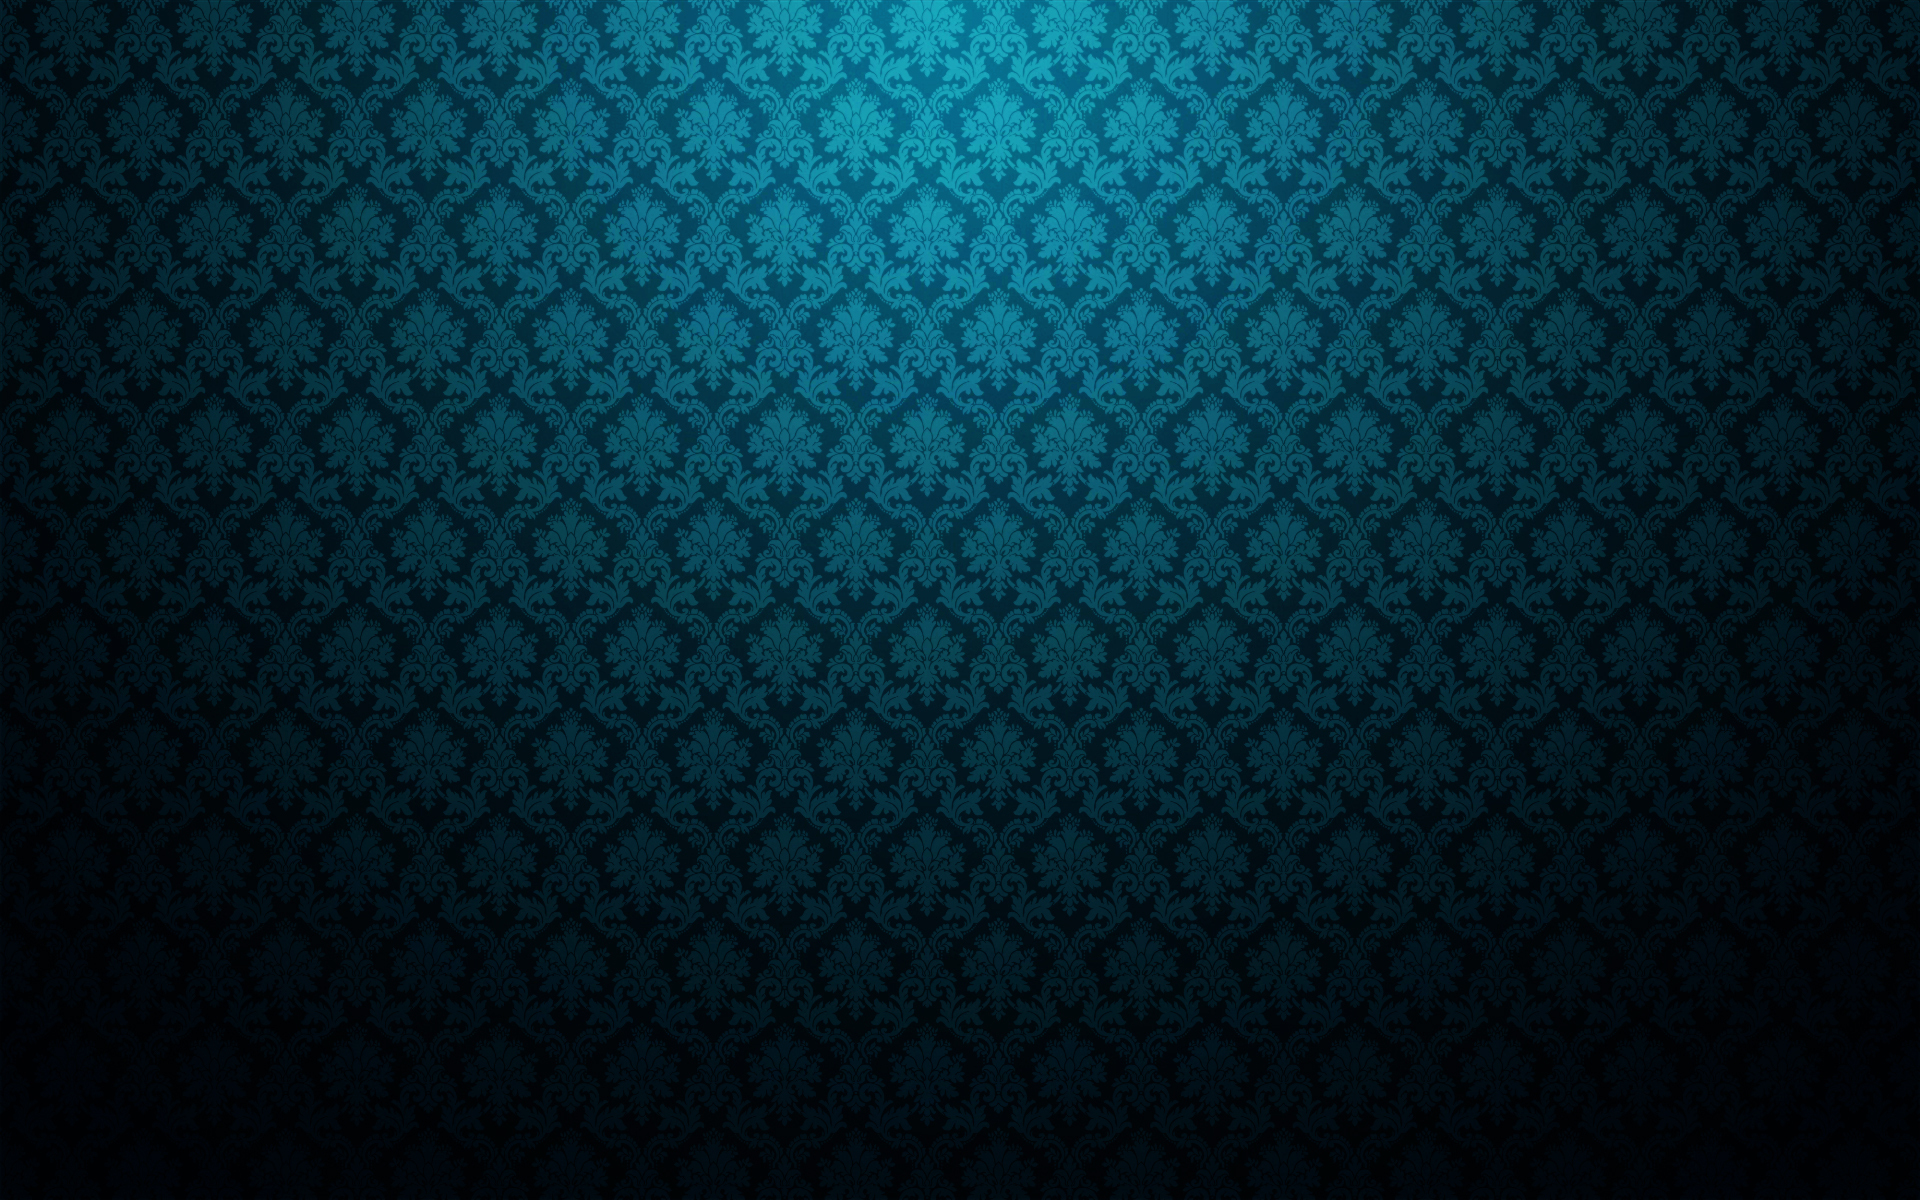 Blue patterned wallpaper